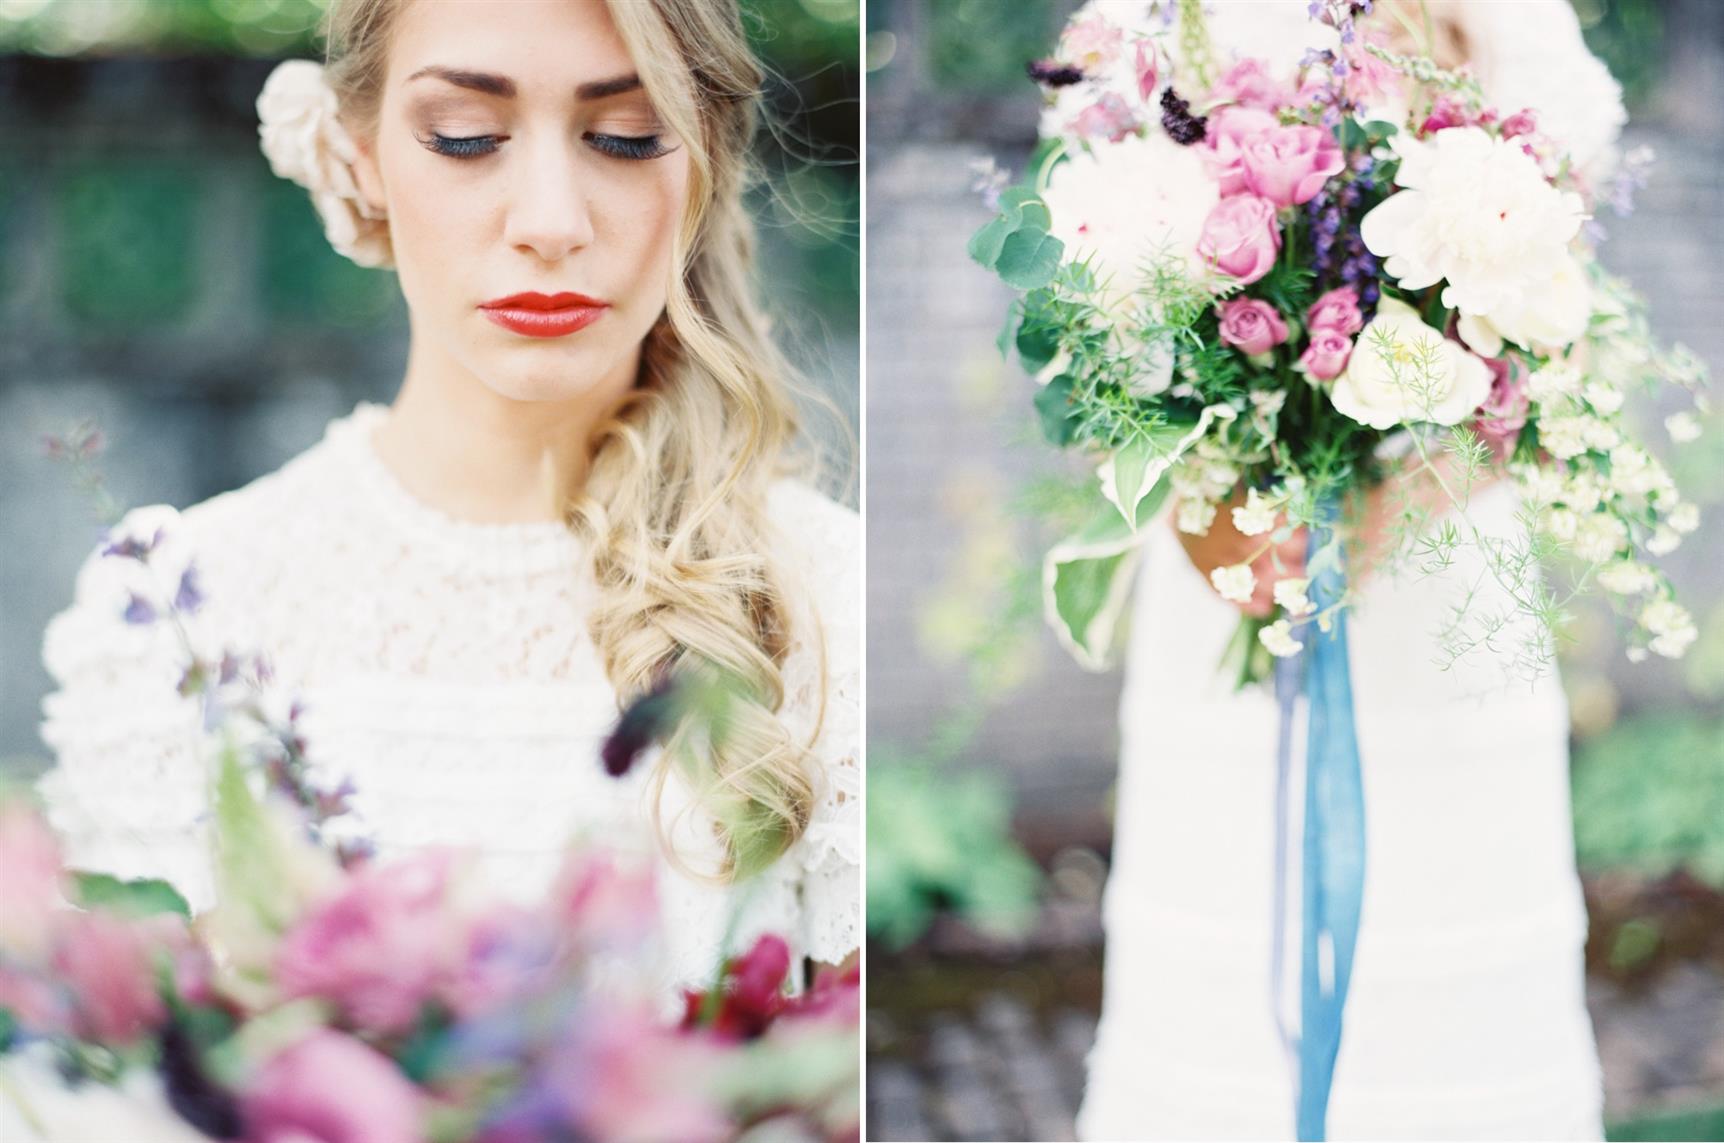 Bridal Bouquet - "The Secret Garden" A Romantic Garden Wedding Inspiration Shoot